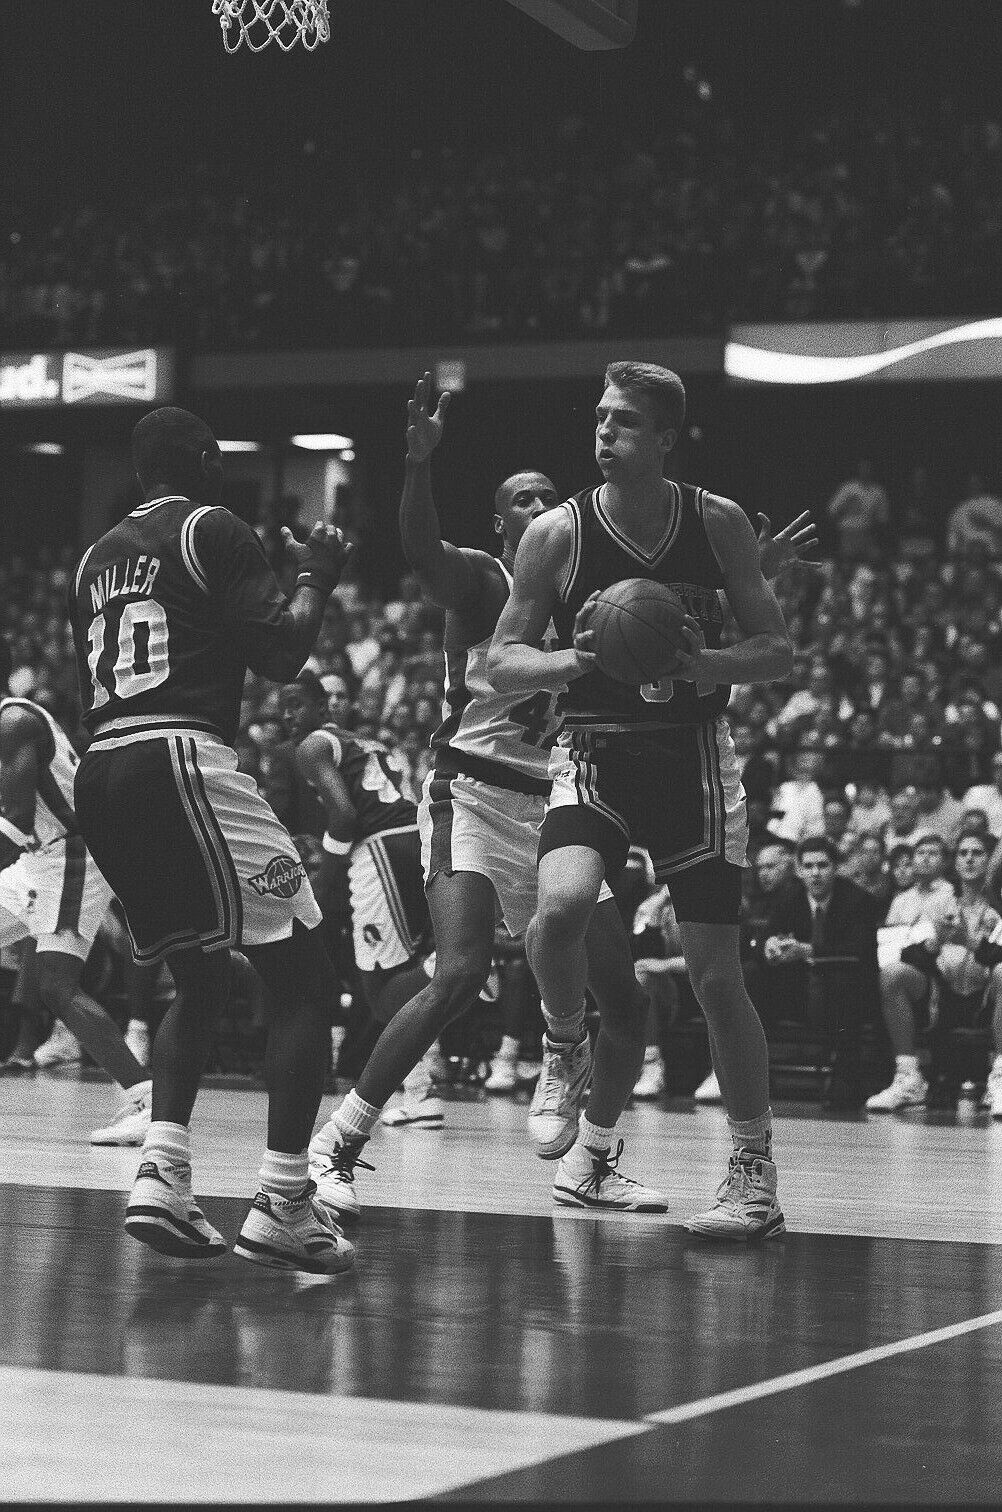 LD126-15 1992 College Basketball DePaul Marquette (140) ORIG 35mm B&W NEGATIVES Без бренда - фотография #3